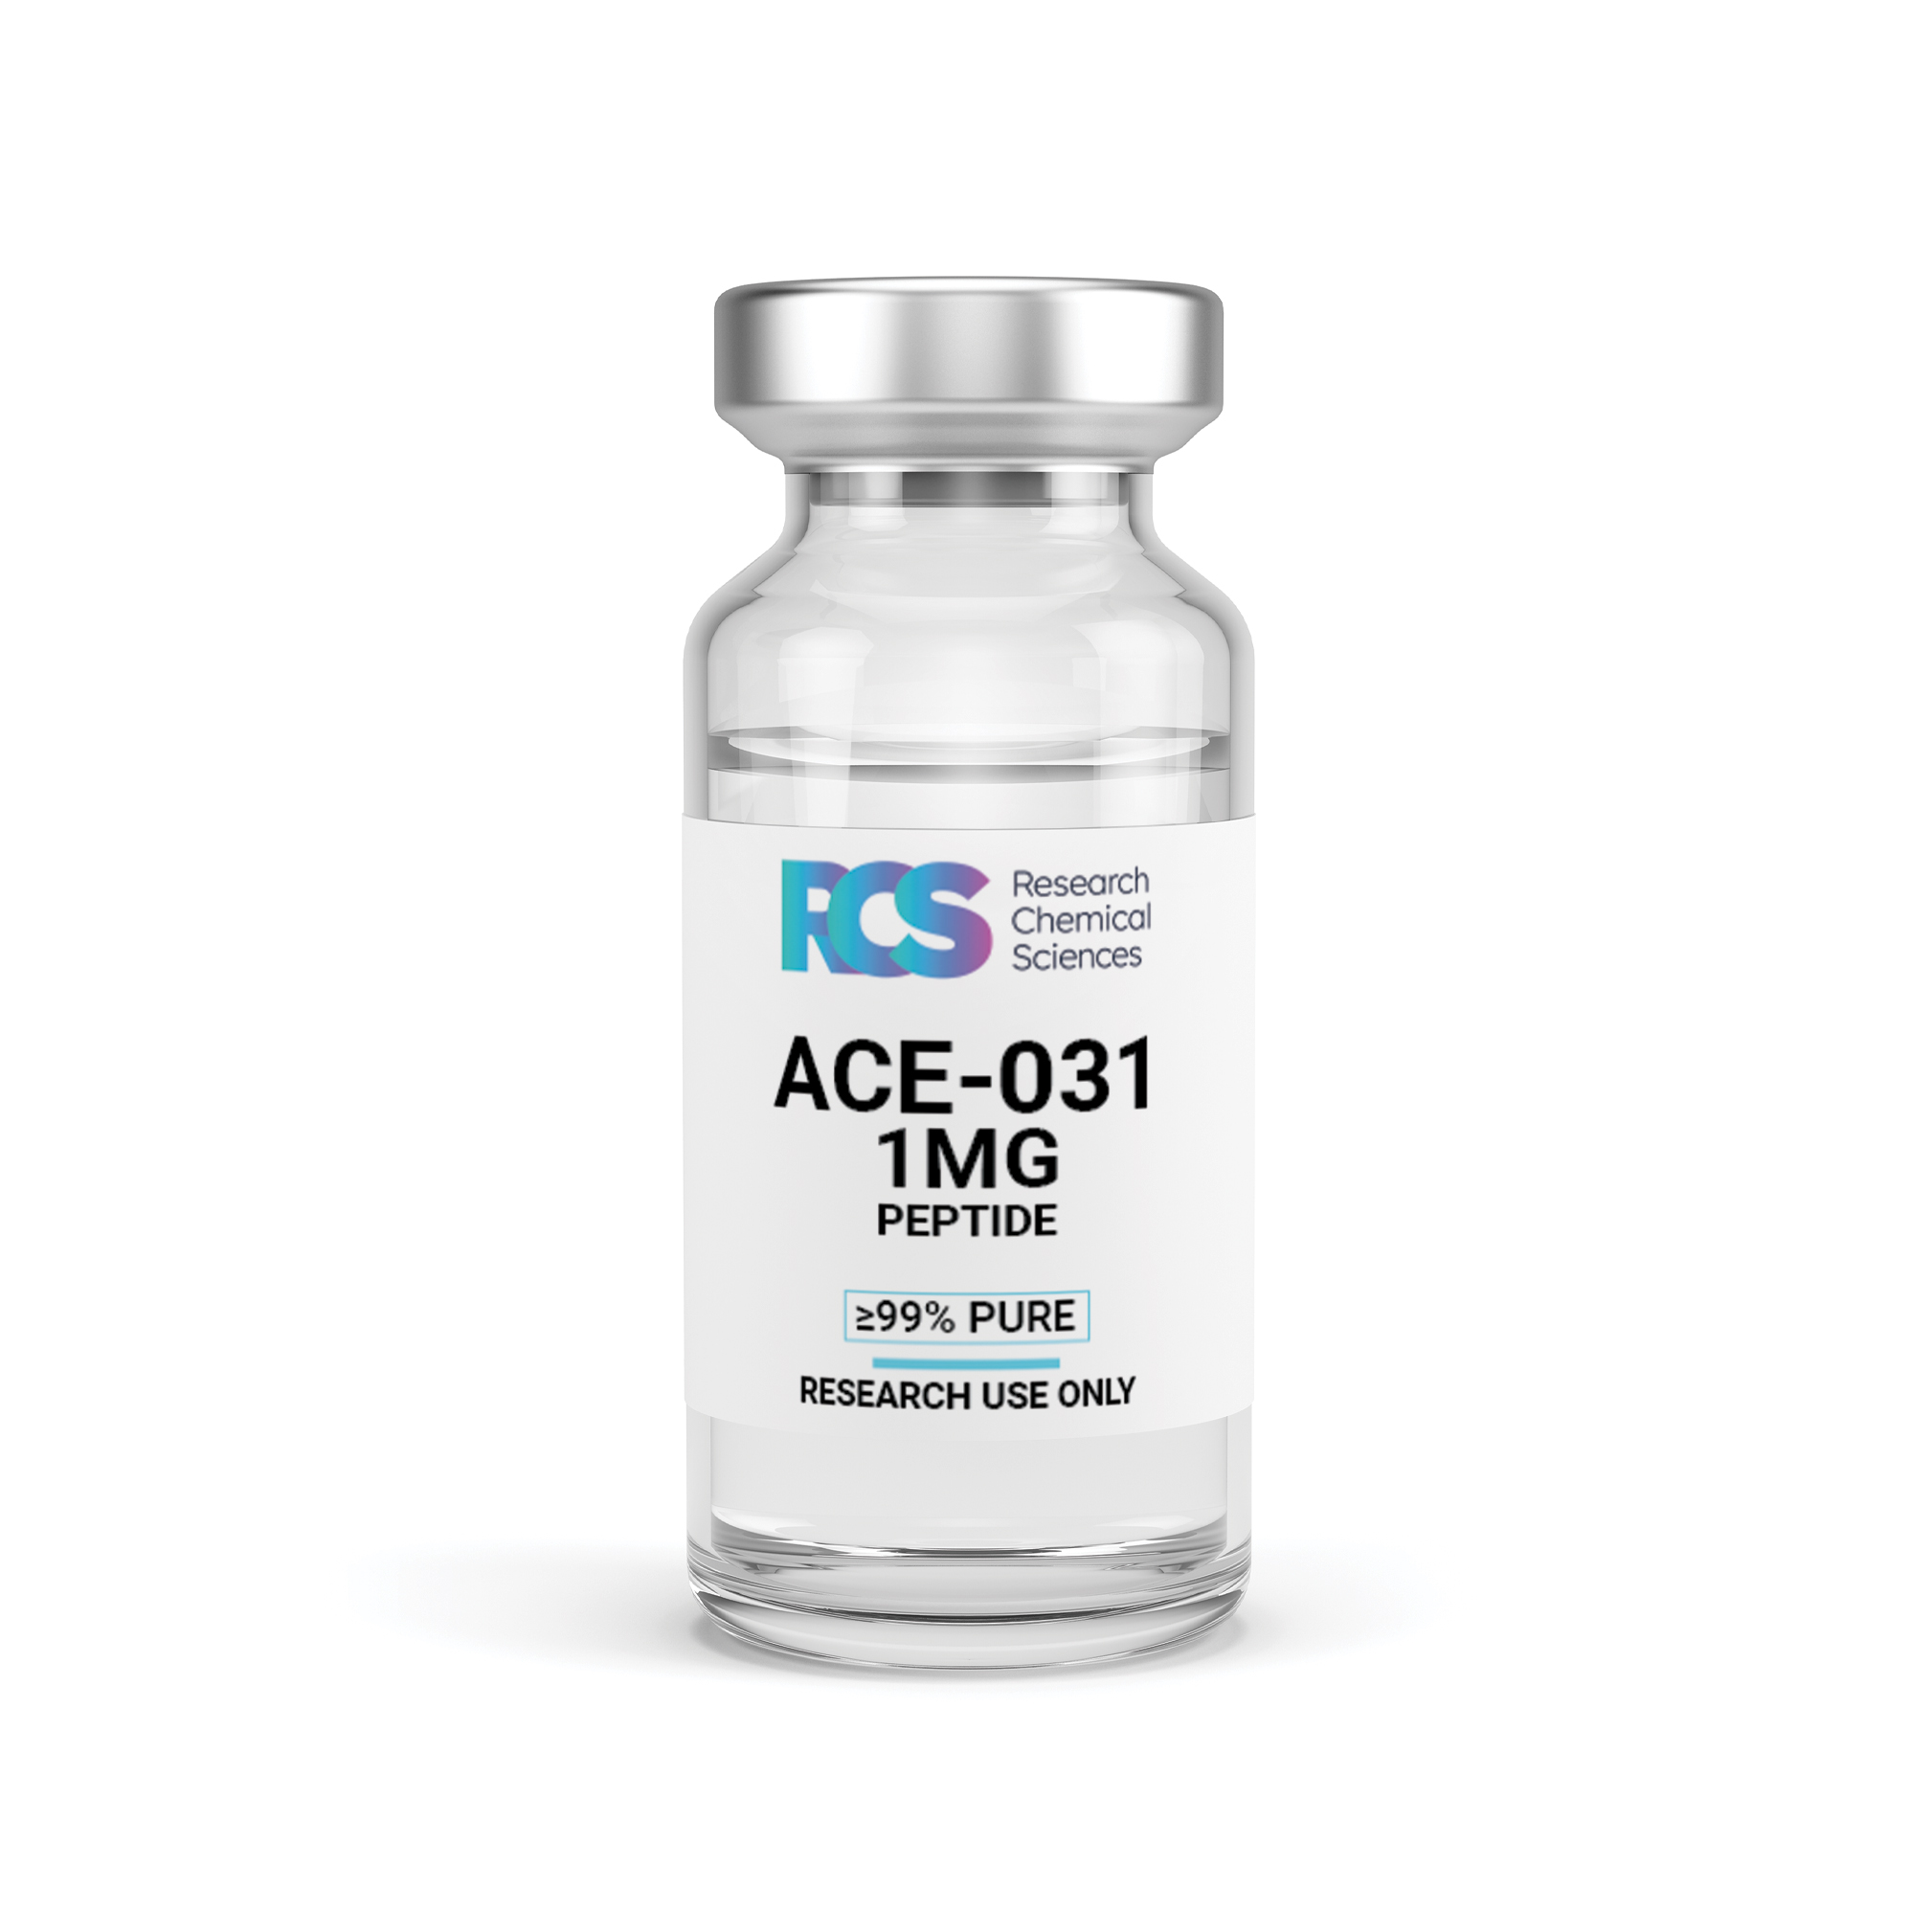 RCS-ACE-031-Peptide-1MG-Side-1